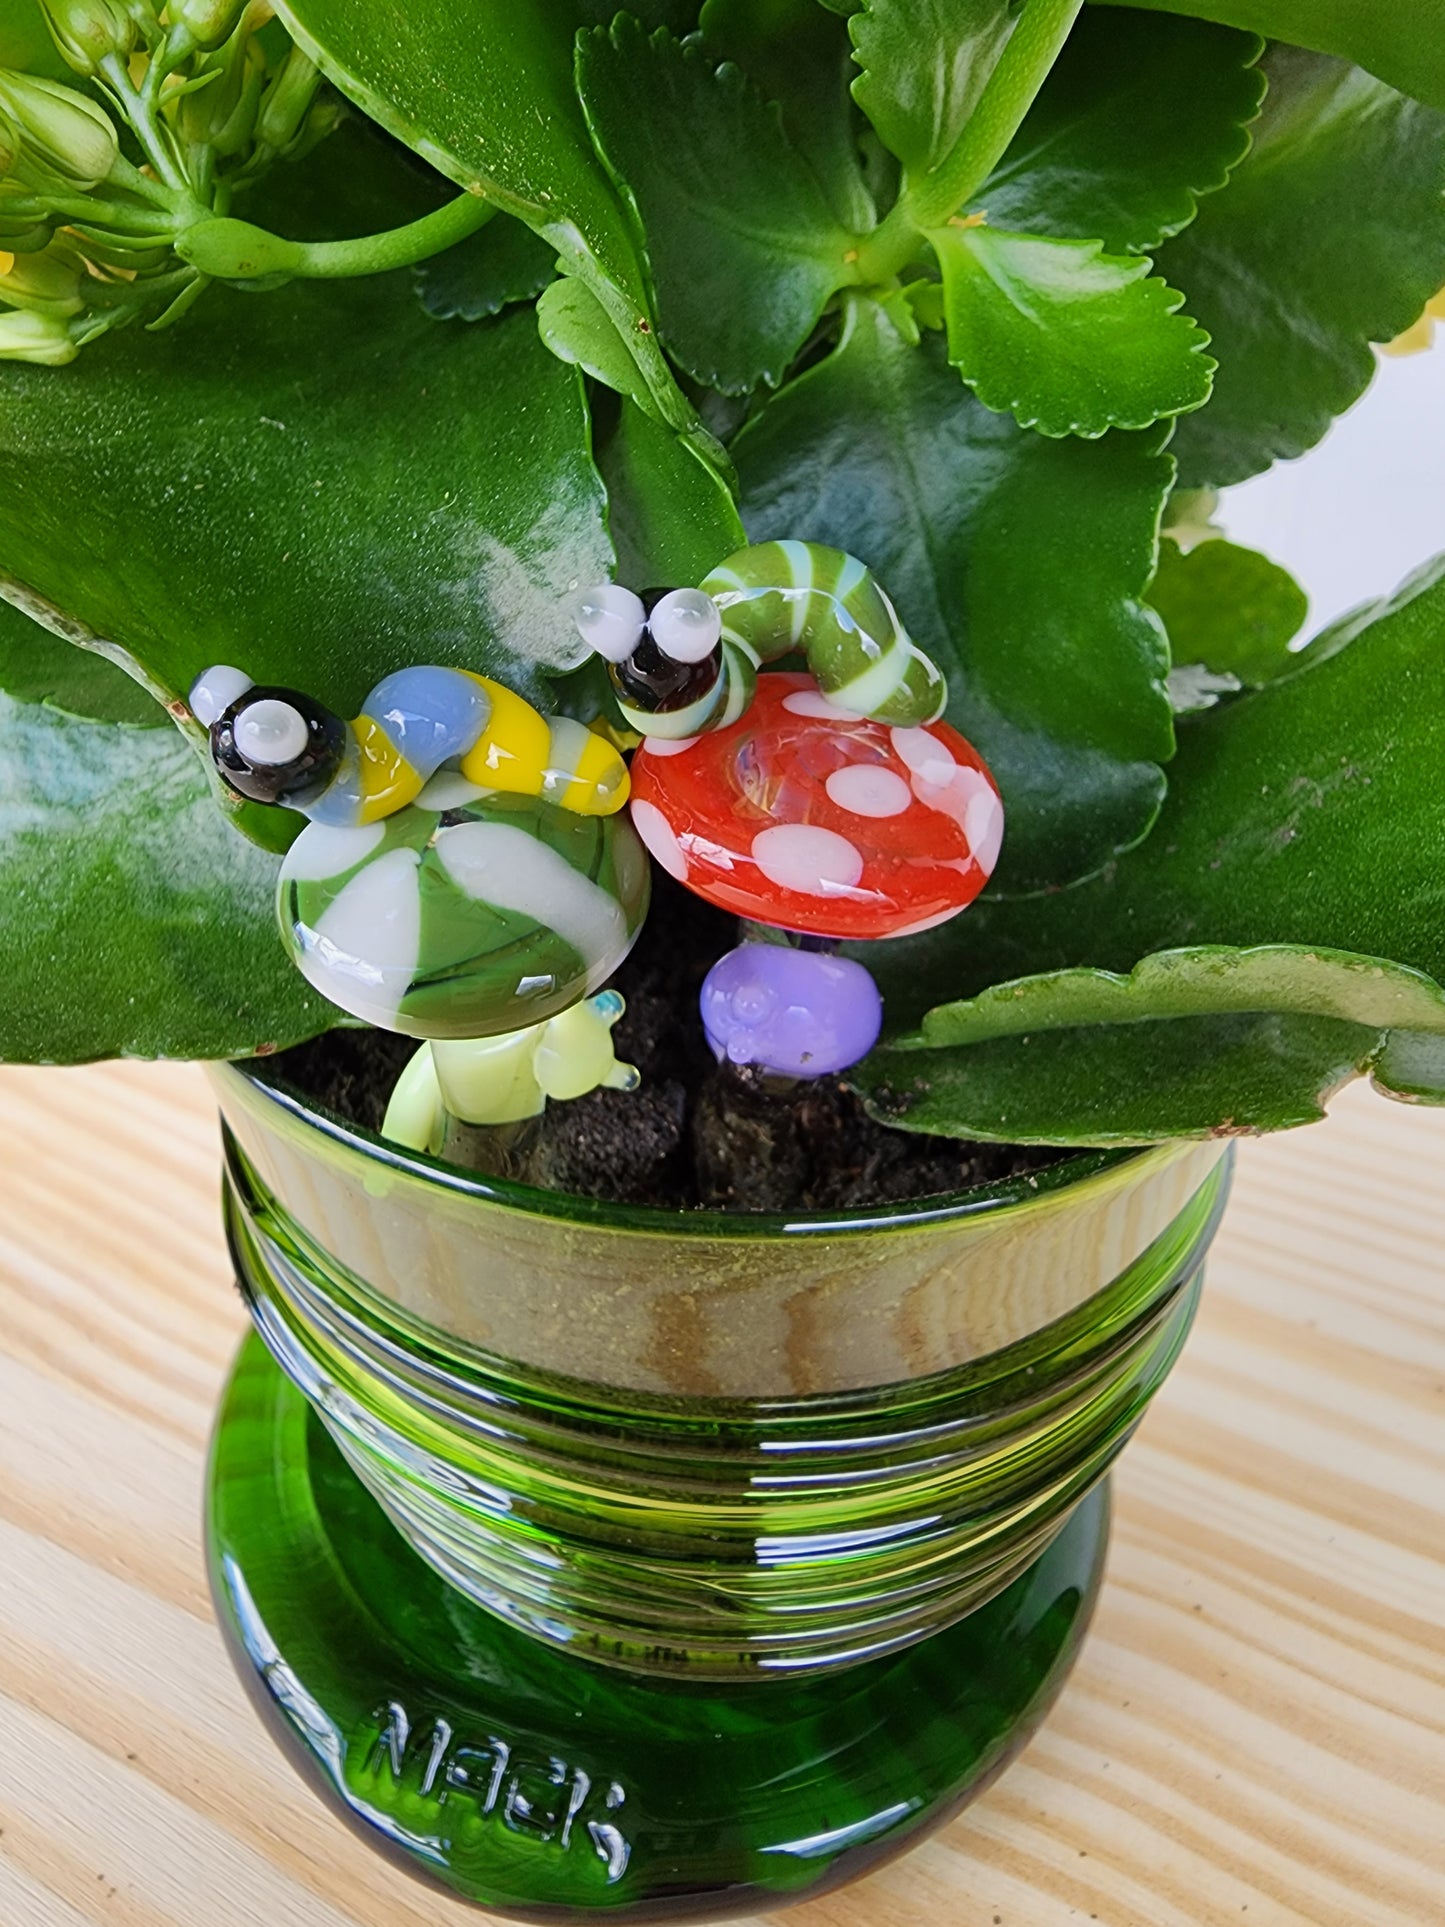 Mushroom Planter Decoration with Caterpillar and Slug Buddies